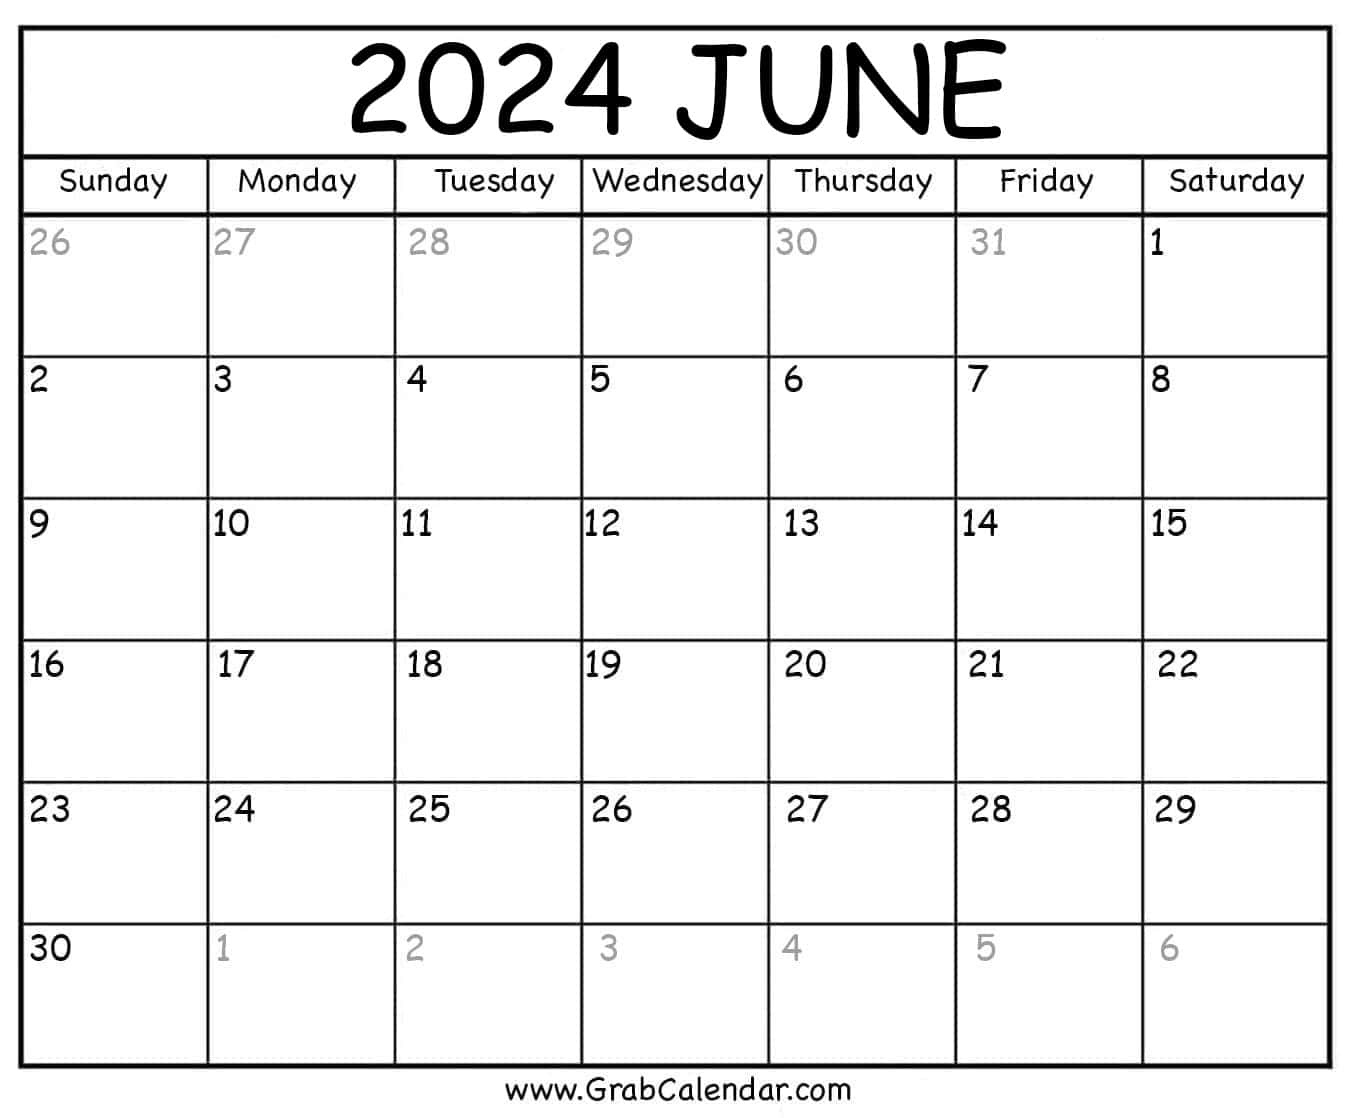 Printable June 2024 Calendar within 2024 Calendar June